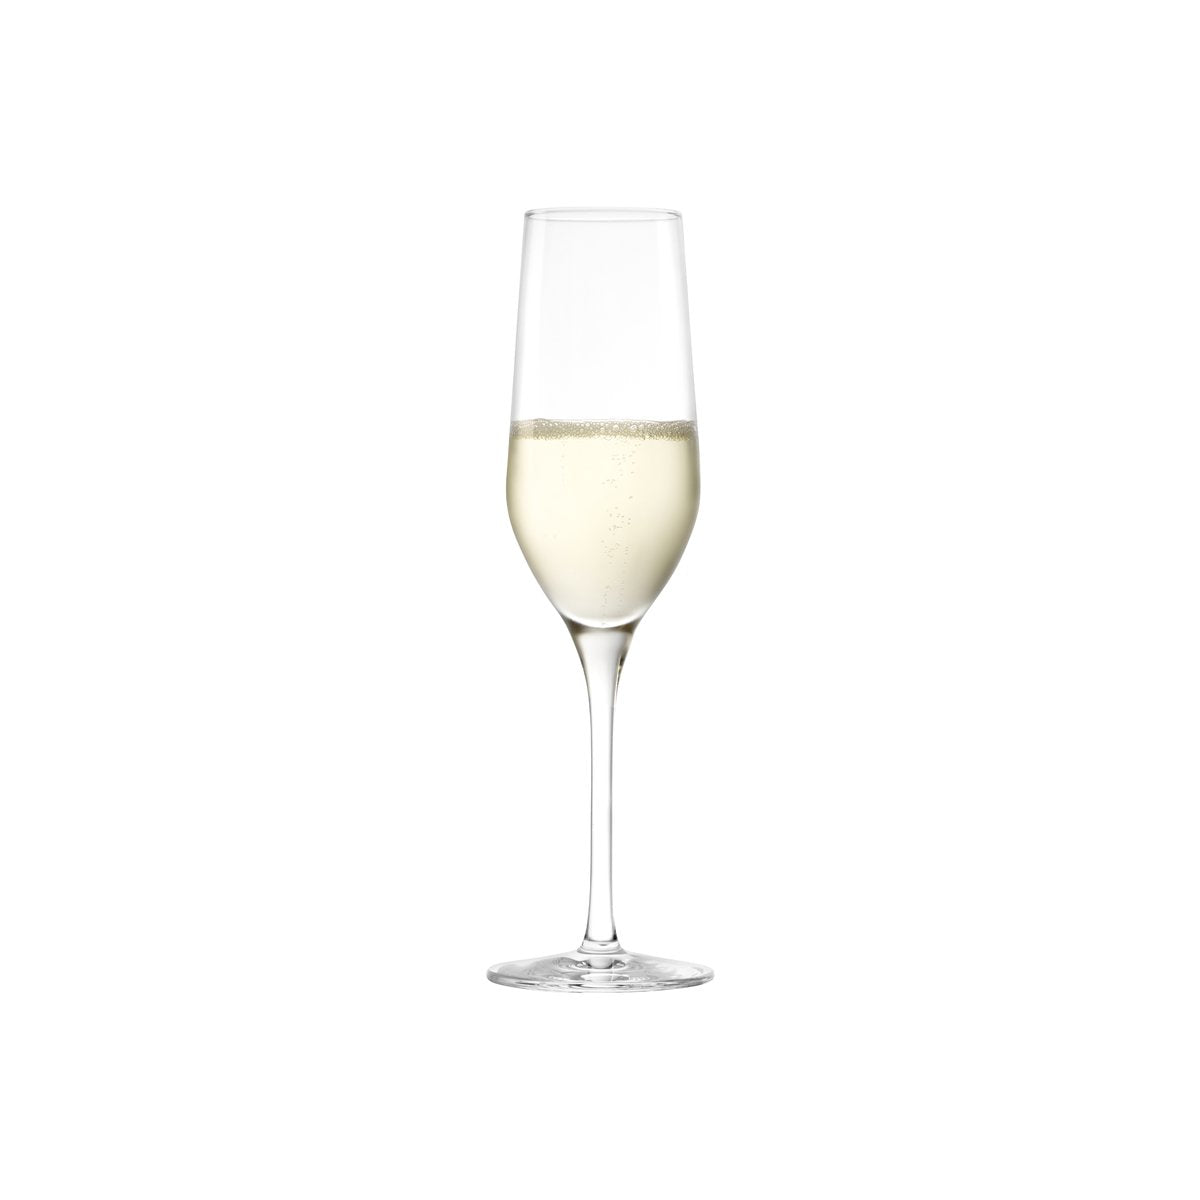 360-996 Stolzle Ultra Champagne Flute 185ml Tomkin Australia Hospitality Supplies